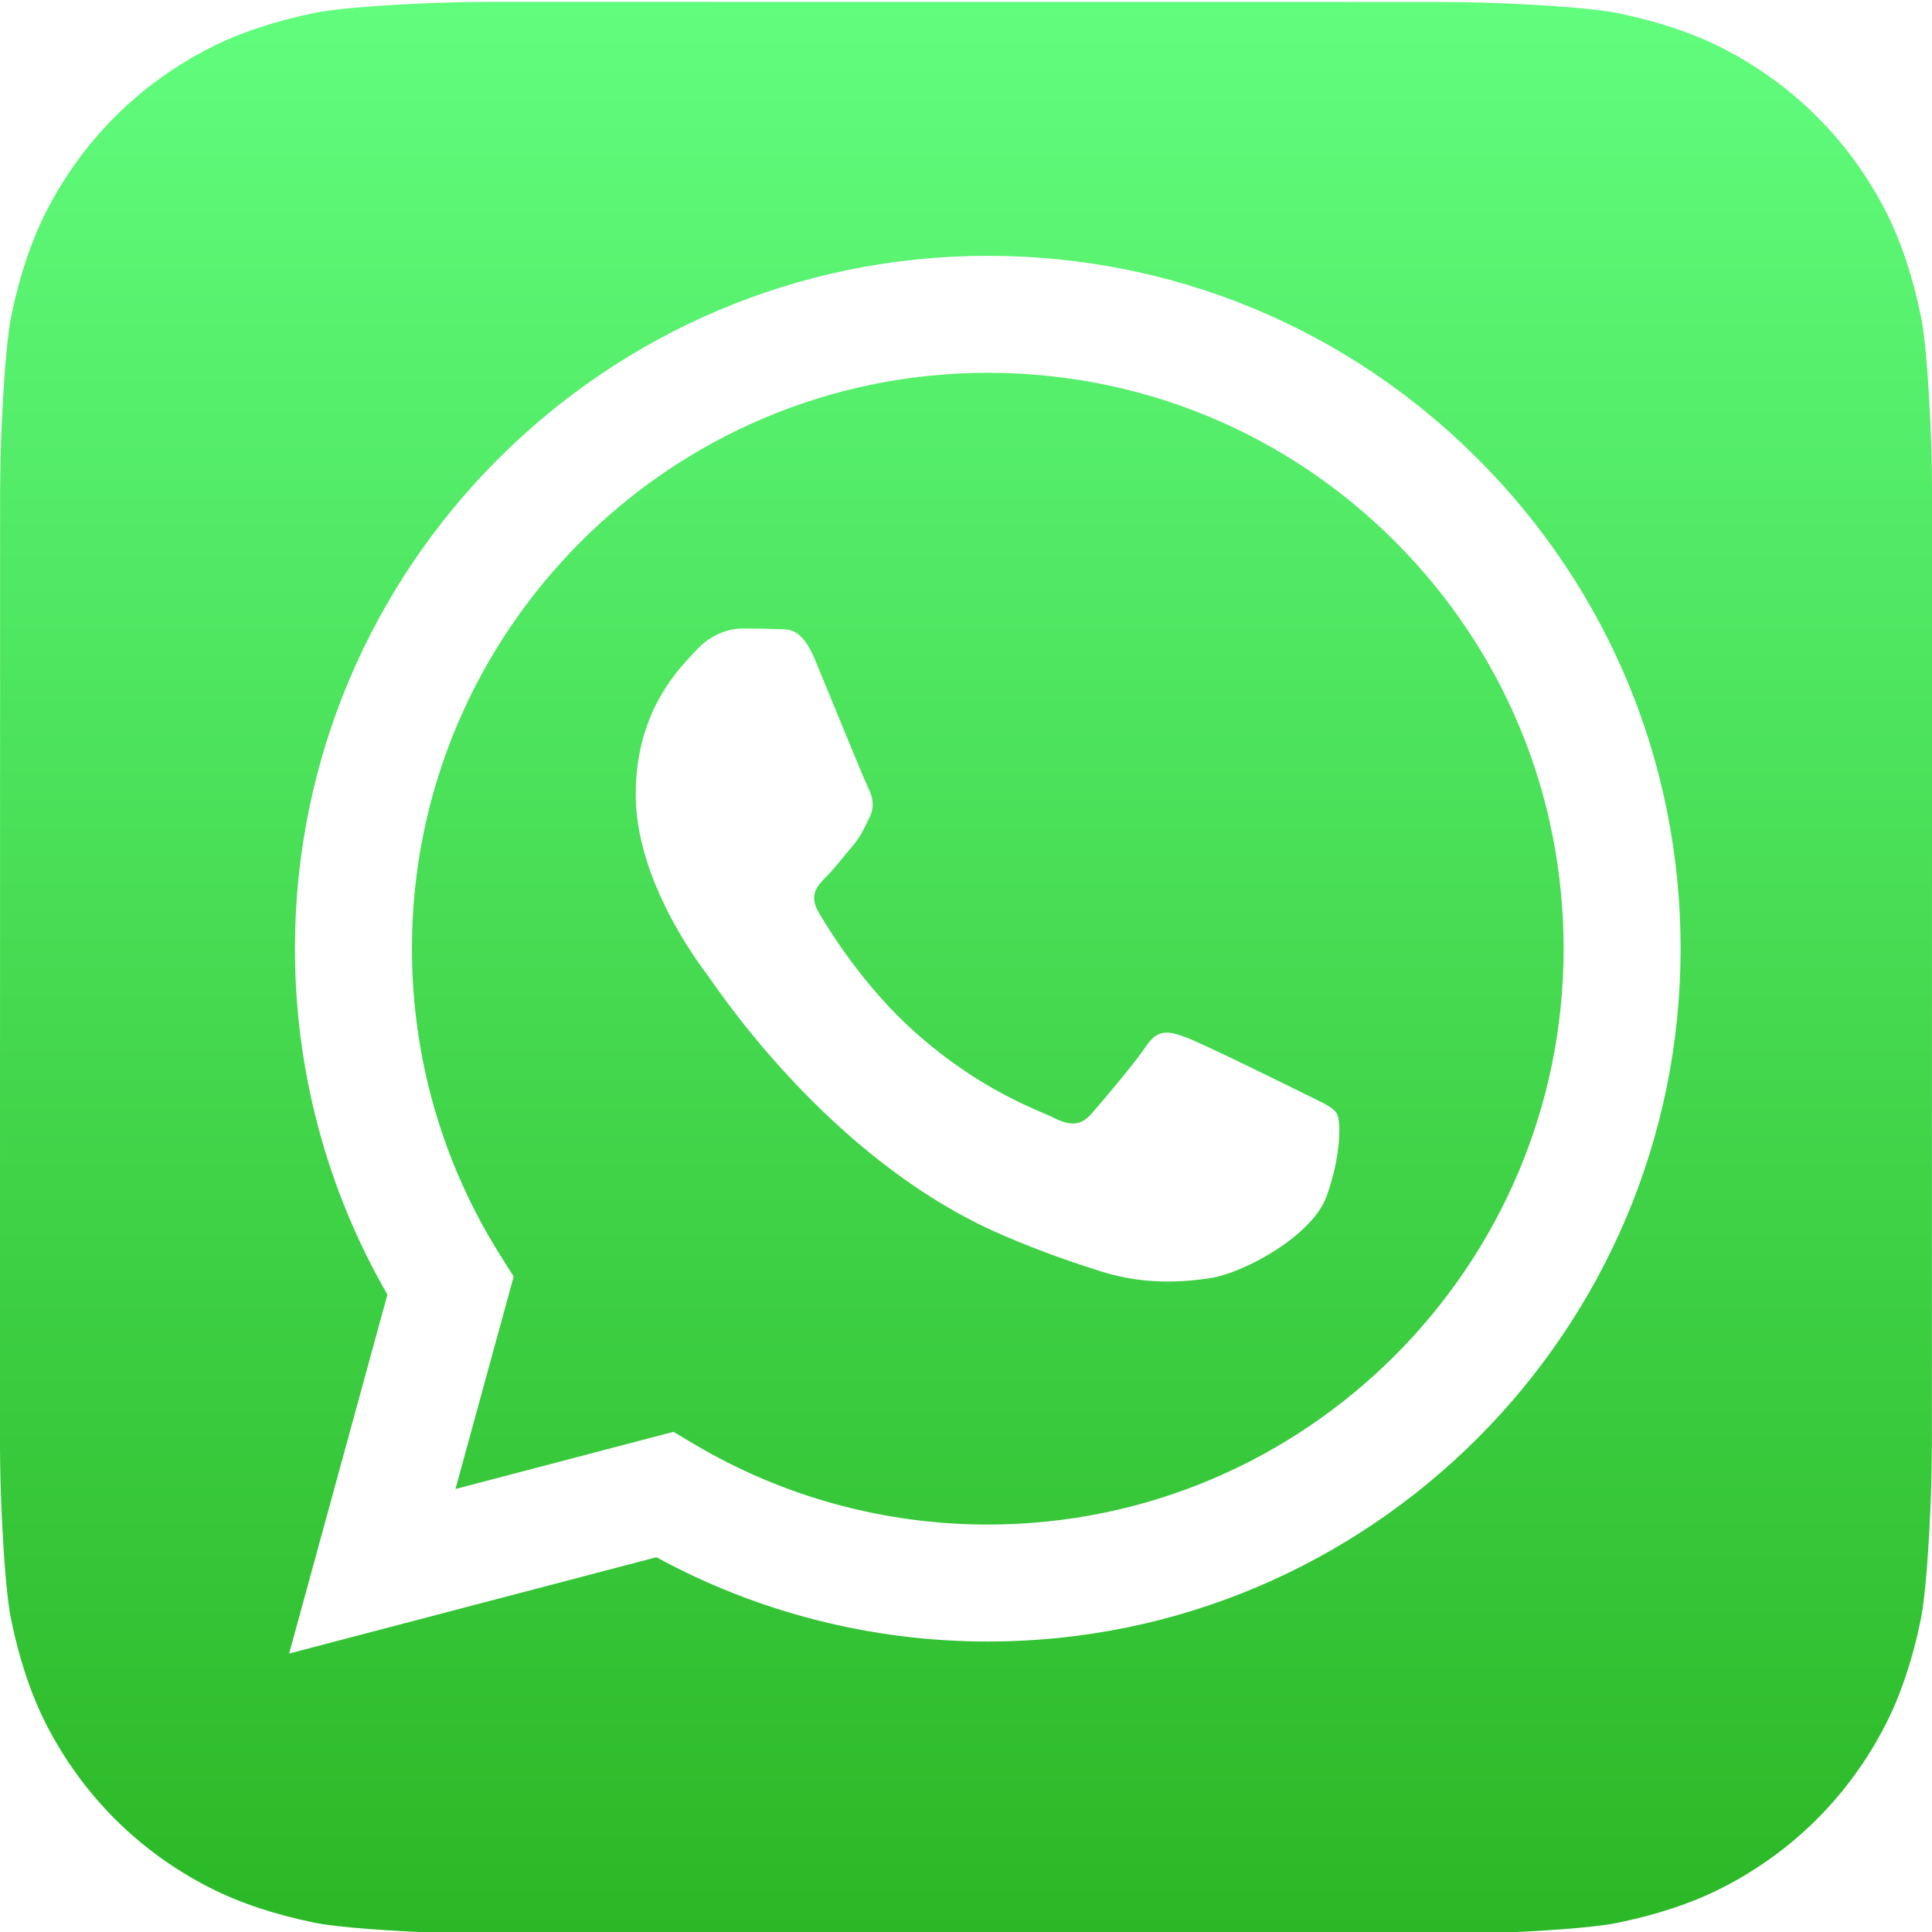 WhatsaApp